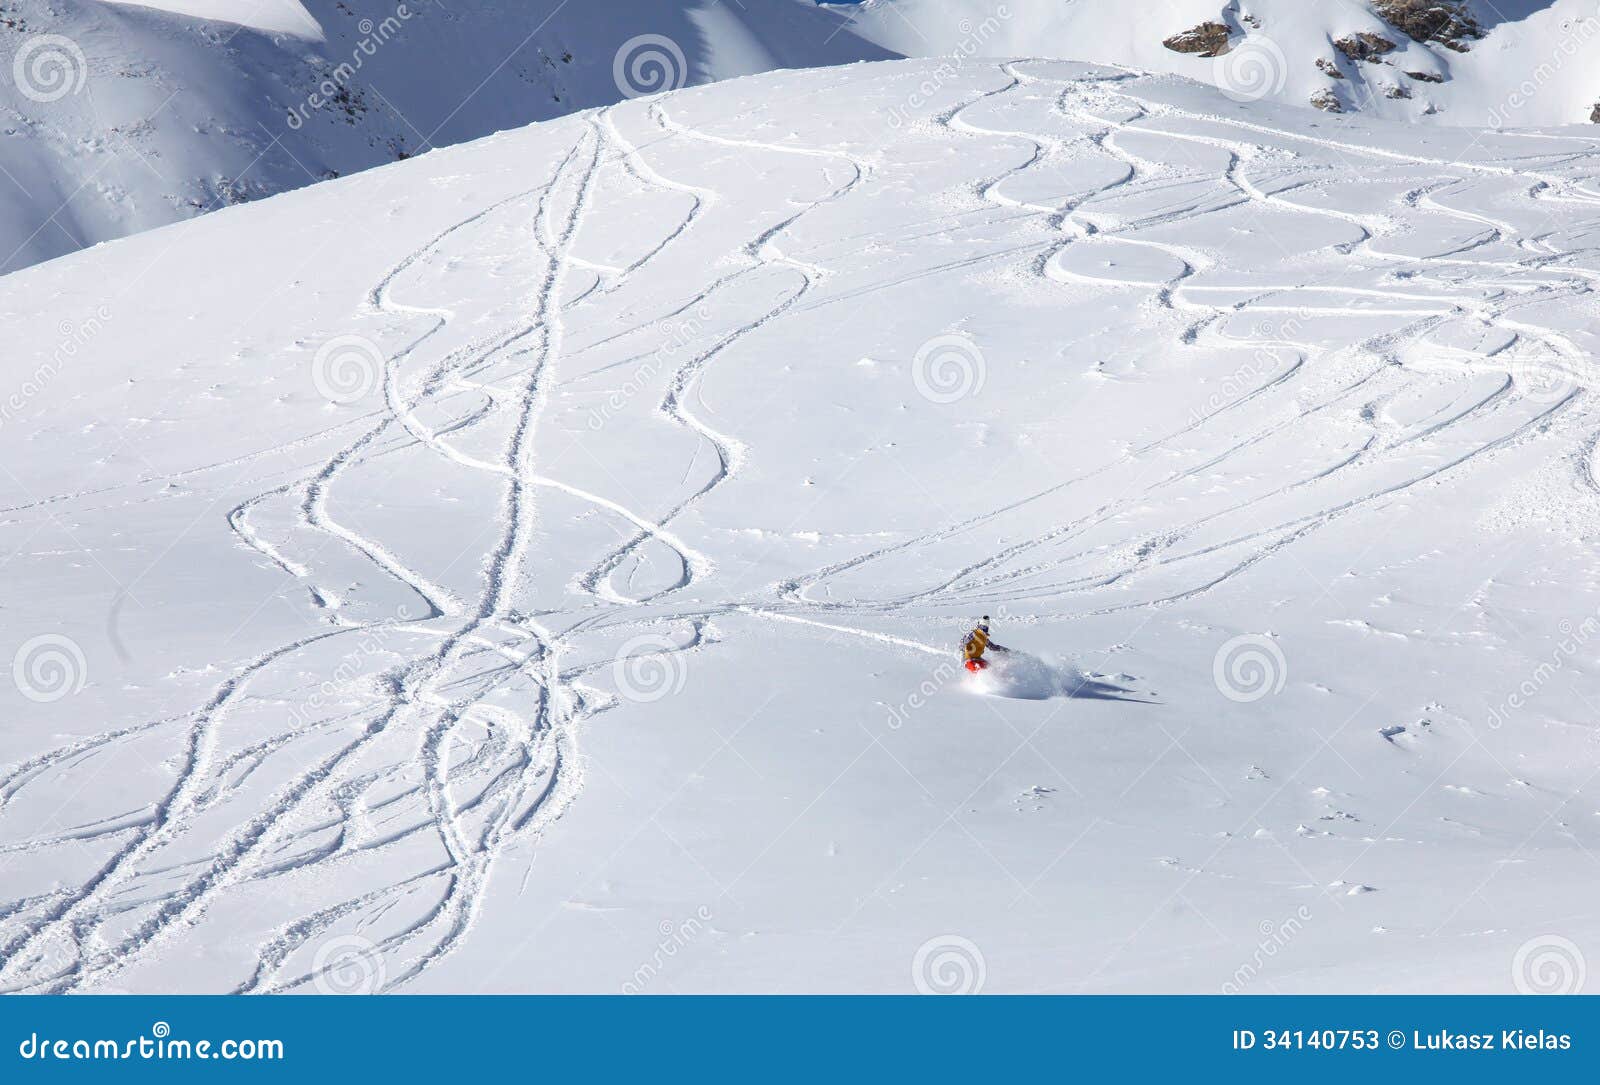 backcountry snowboarder riding fresh powder